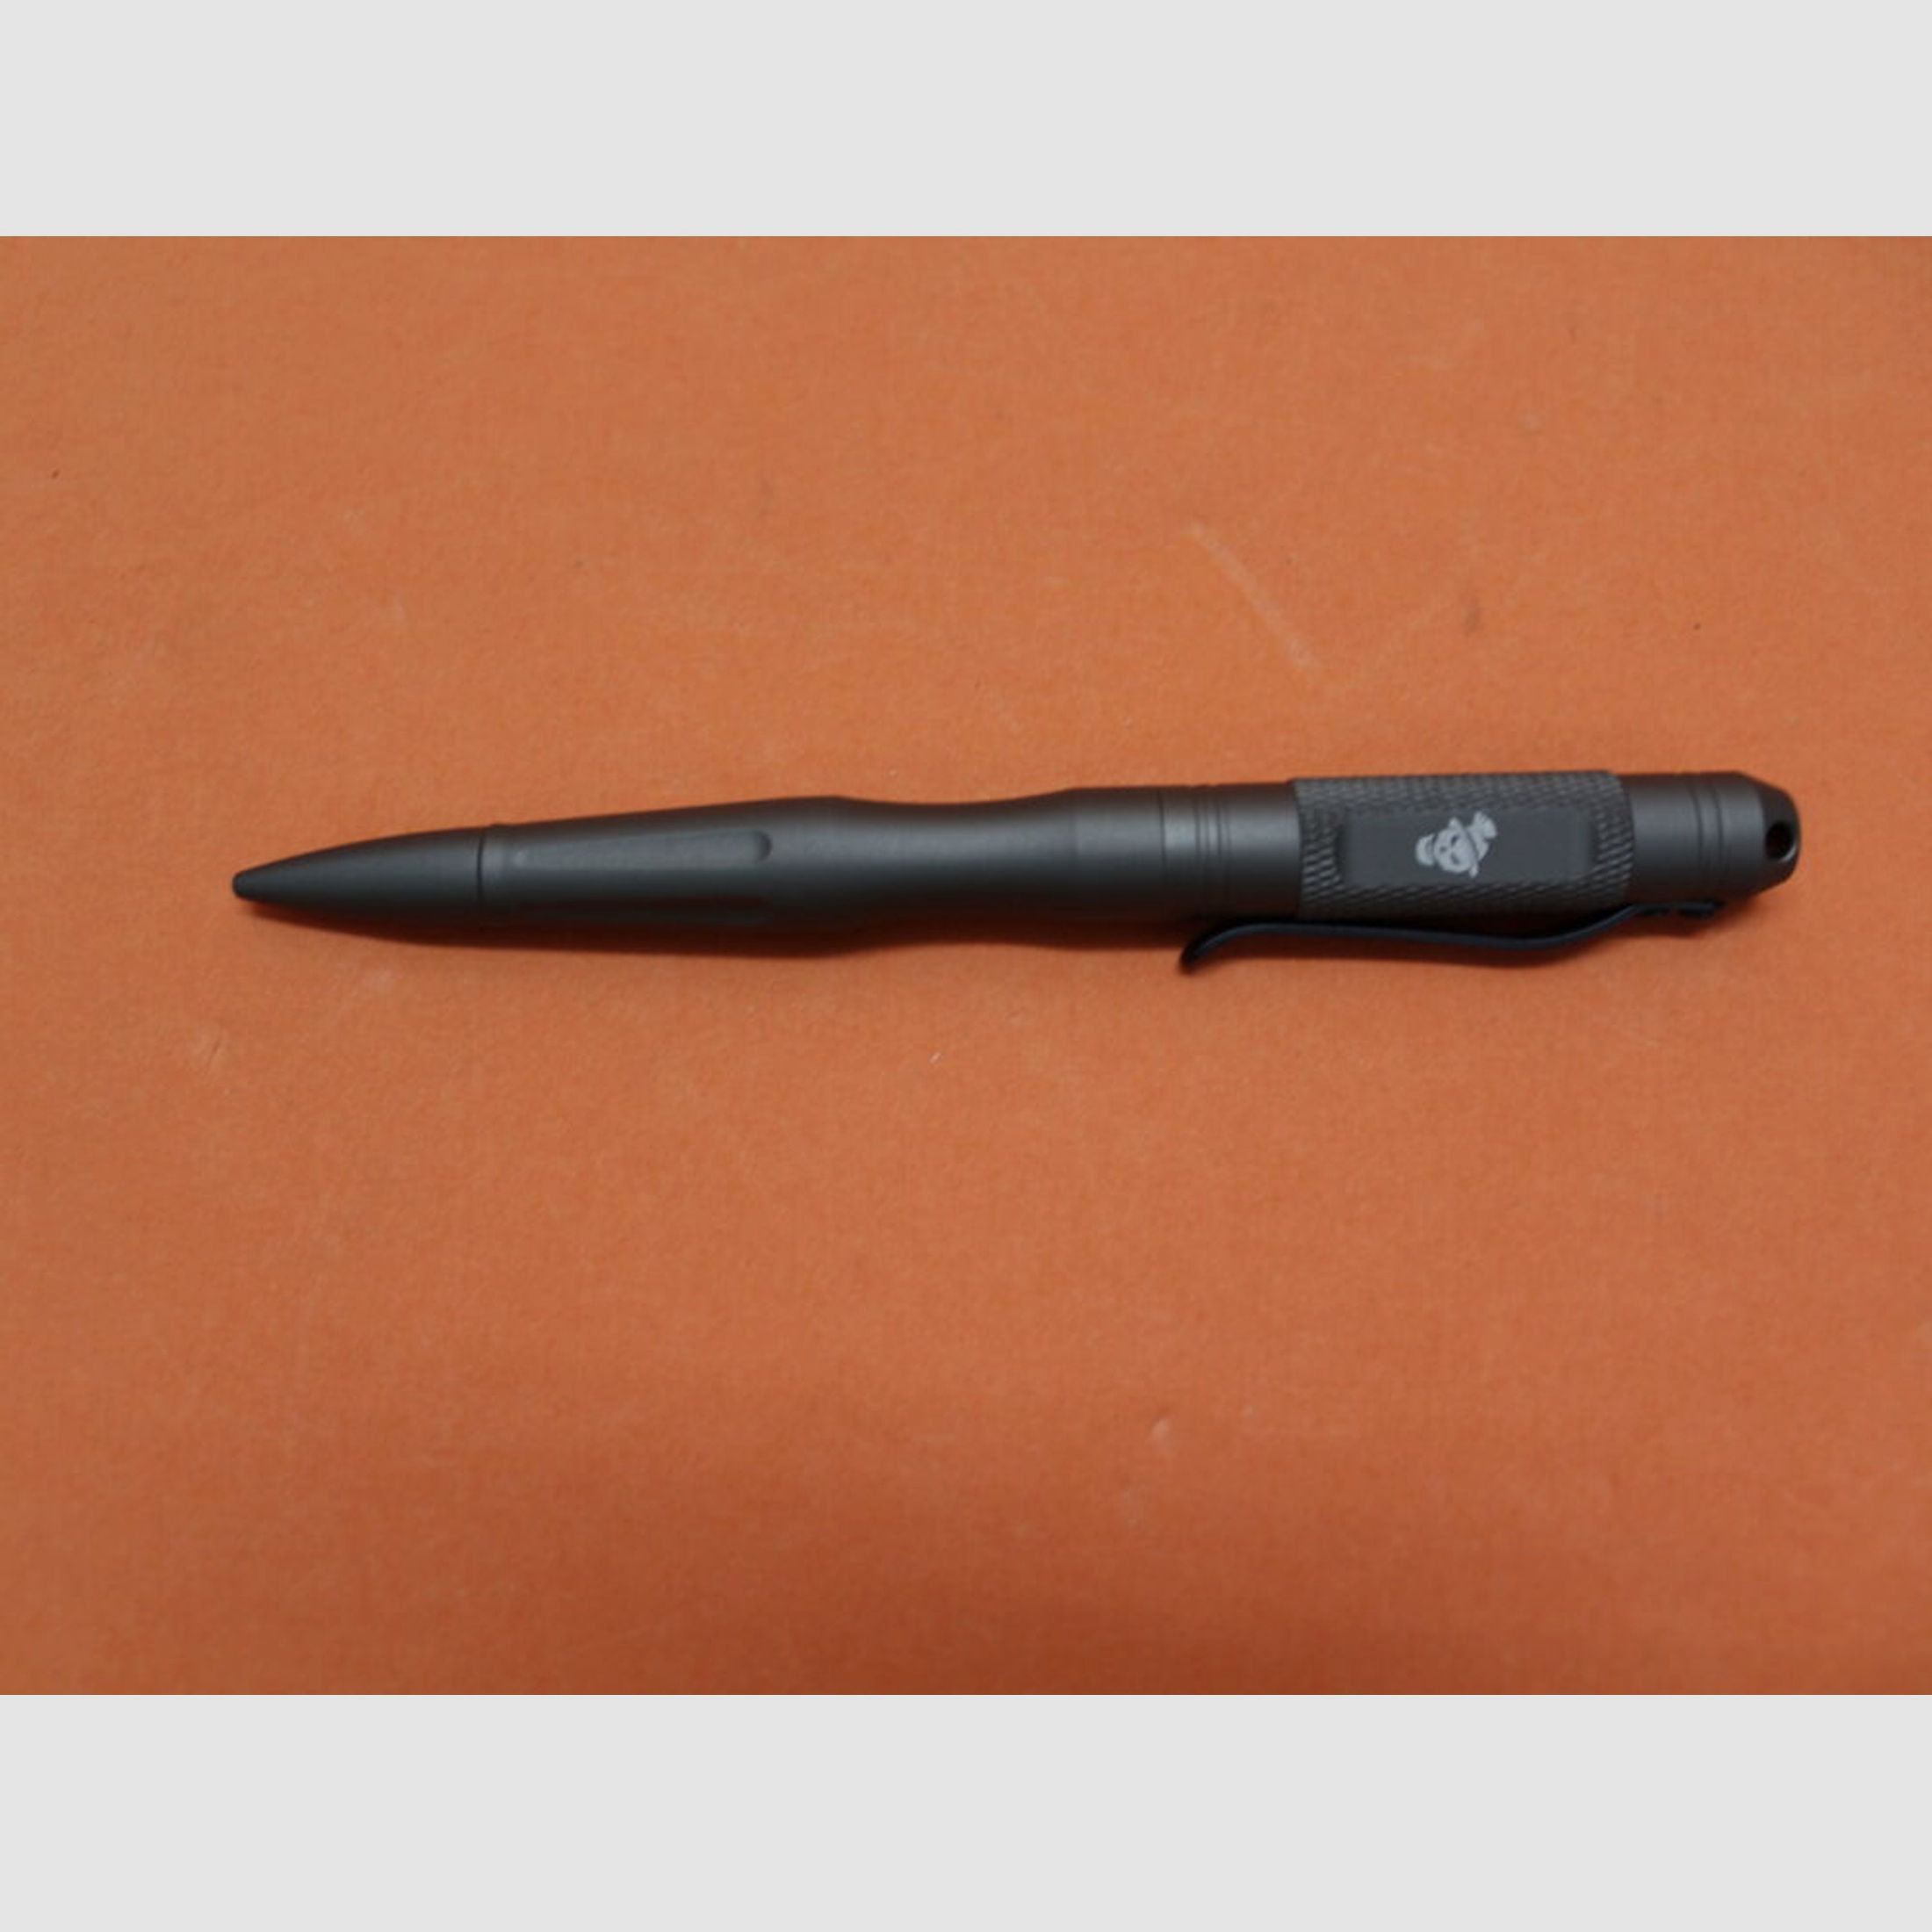 Oberland Arms	 Oberland Arms Sepp Pen grau: Alu harteloxiert mit Touchpad-Gummi (5149-GY)